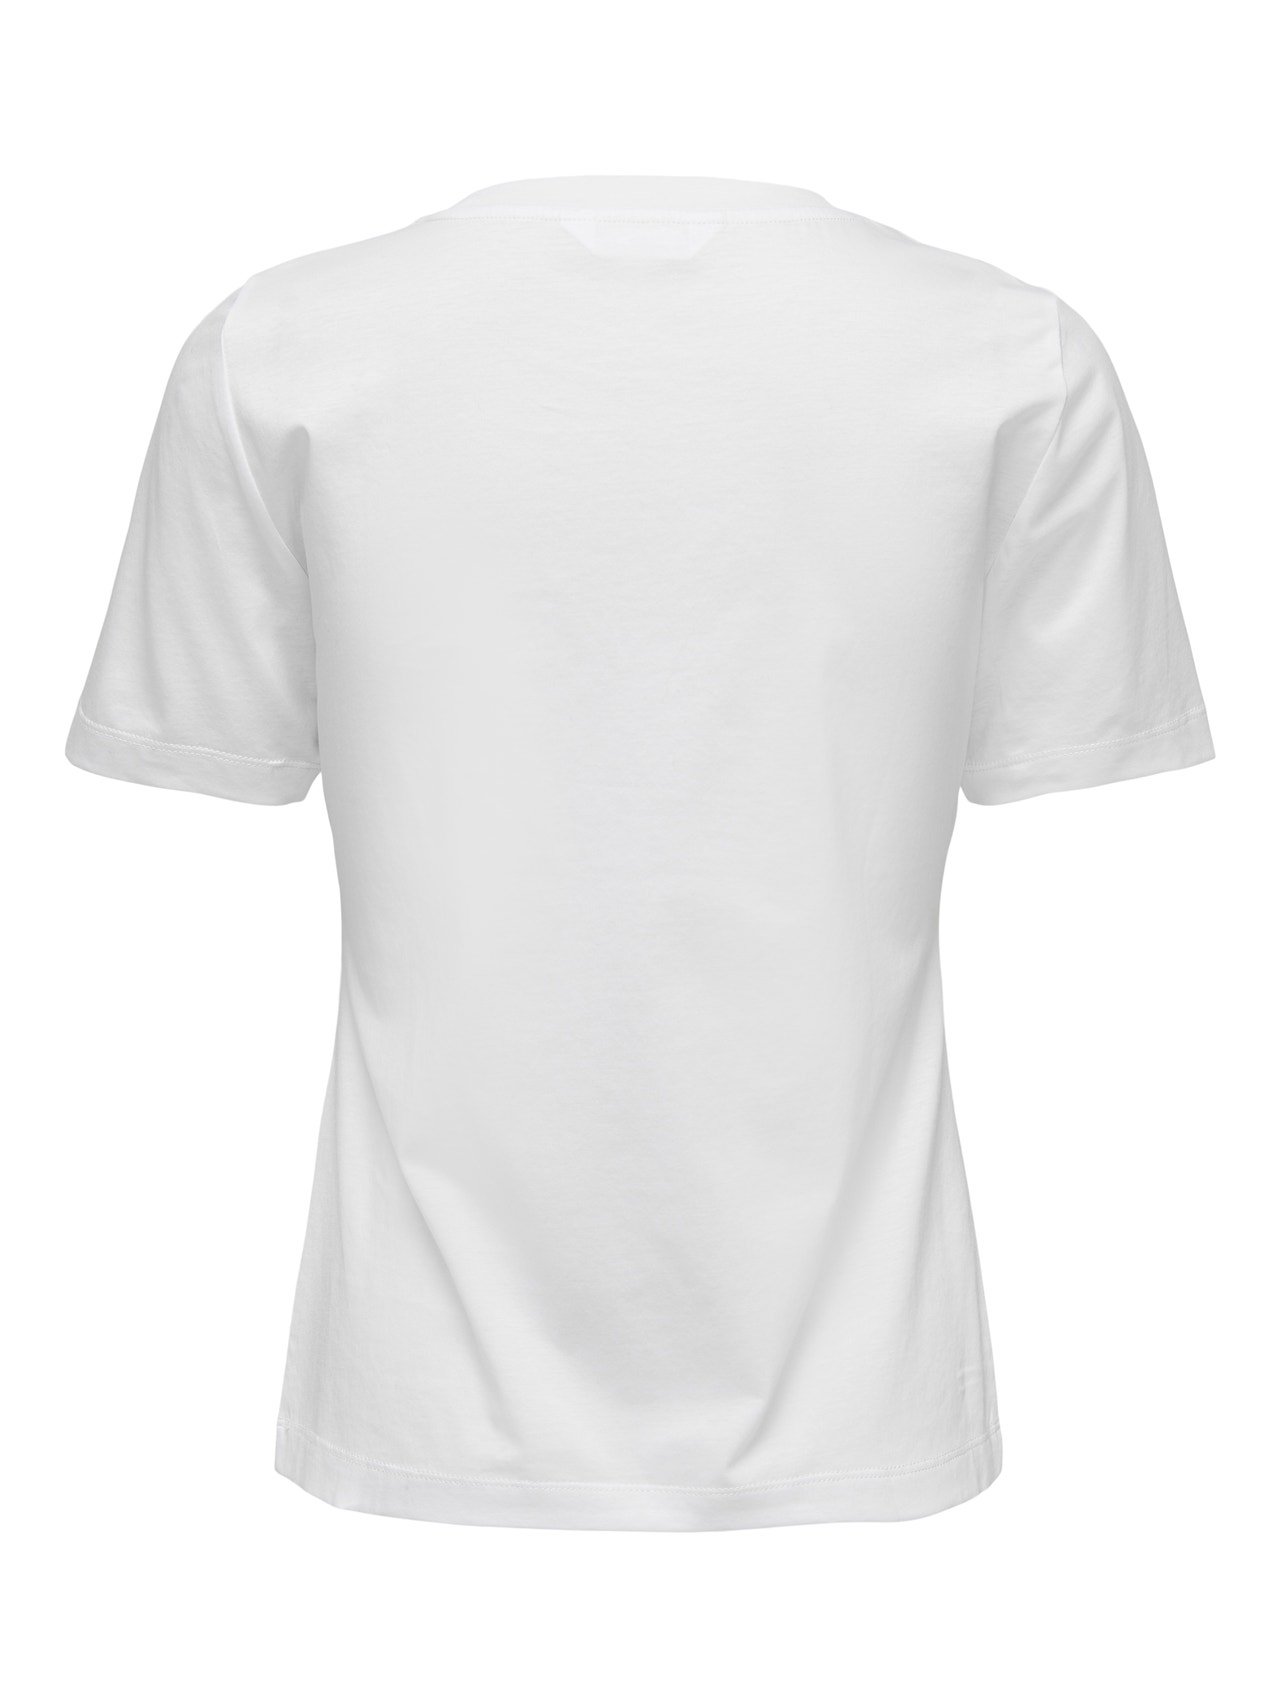 ONLY Ensfarvet O-Hals T-shirt -Bright White - 15211465